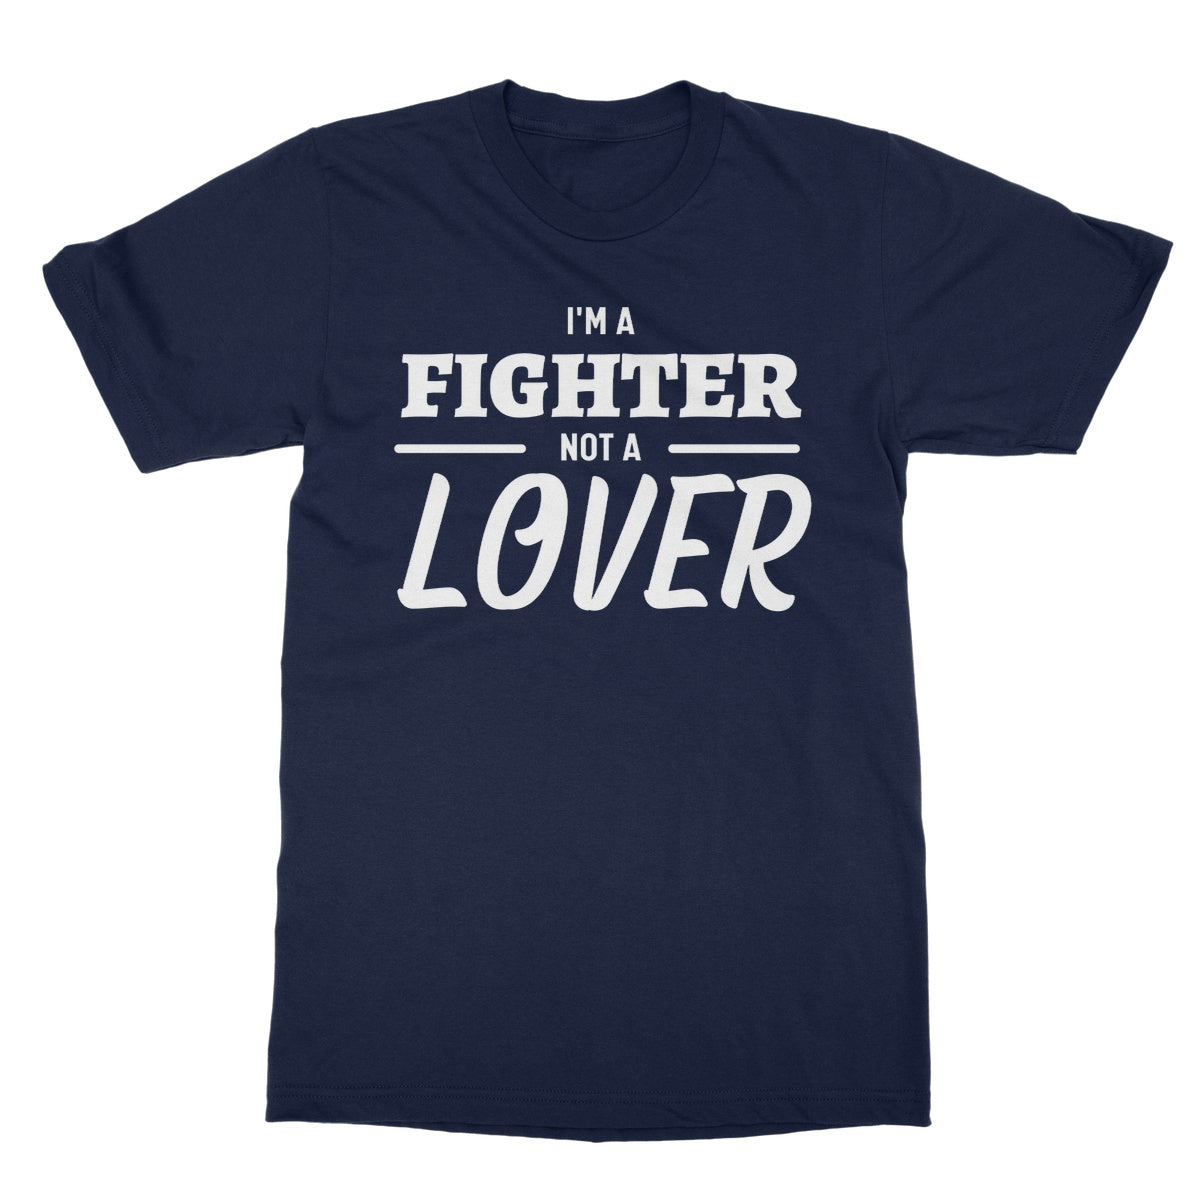 I'm a fighter not a lover t shirt navy